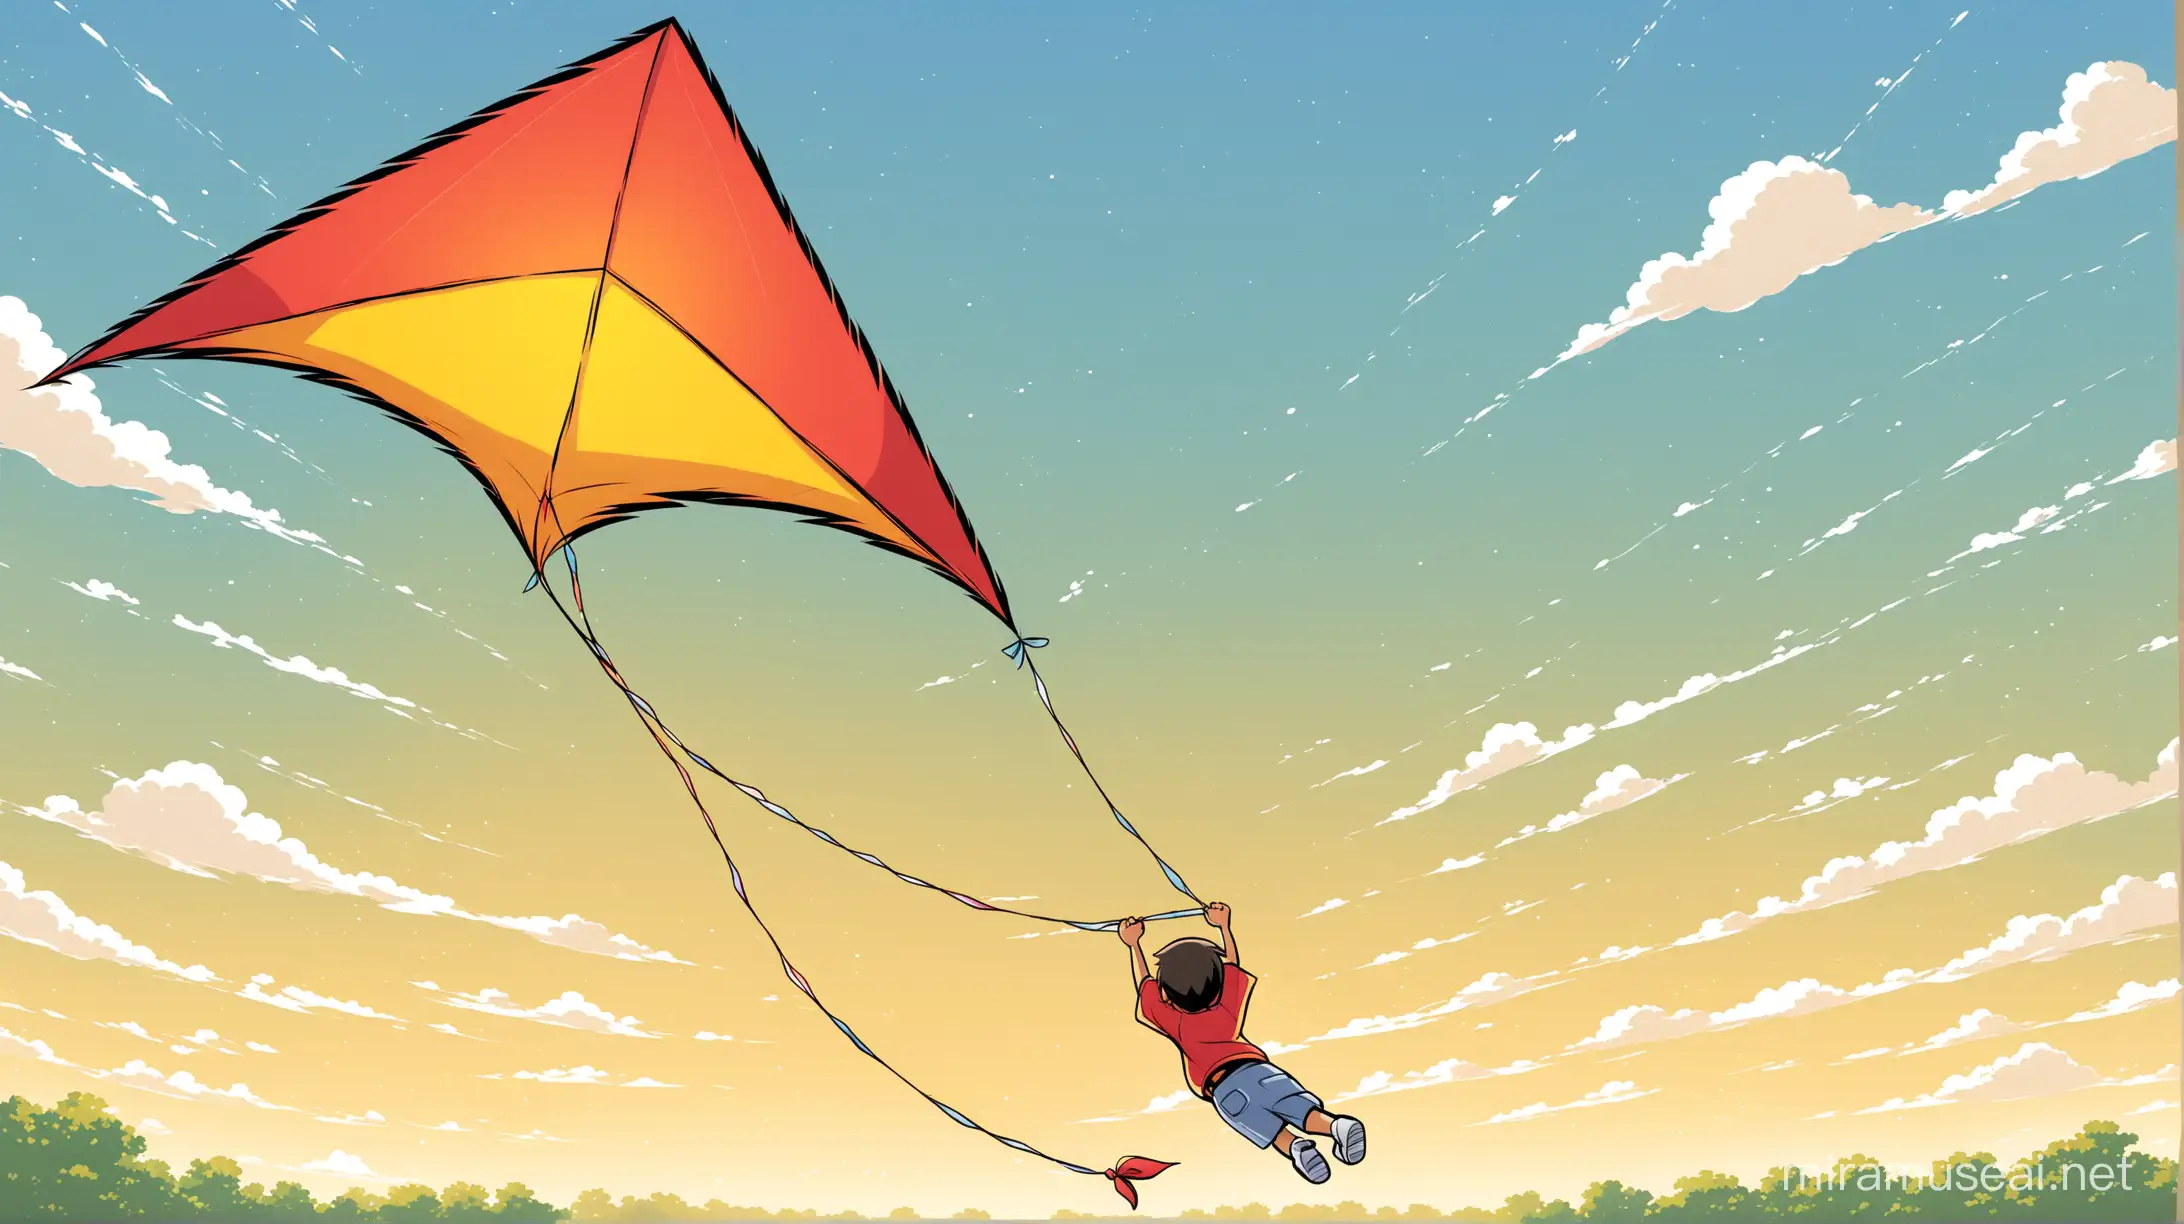 Vibrant Cartoon Kite Soaring in a Blue Sky